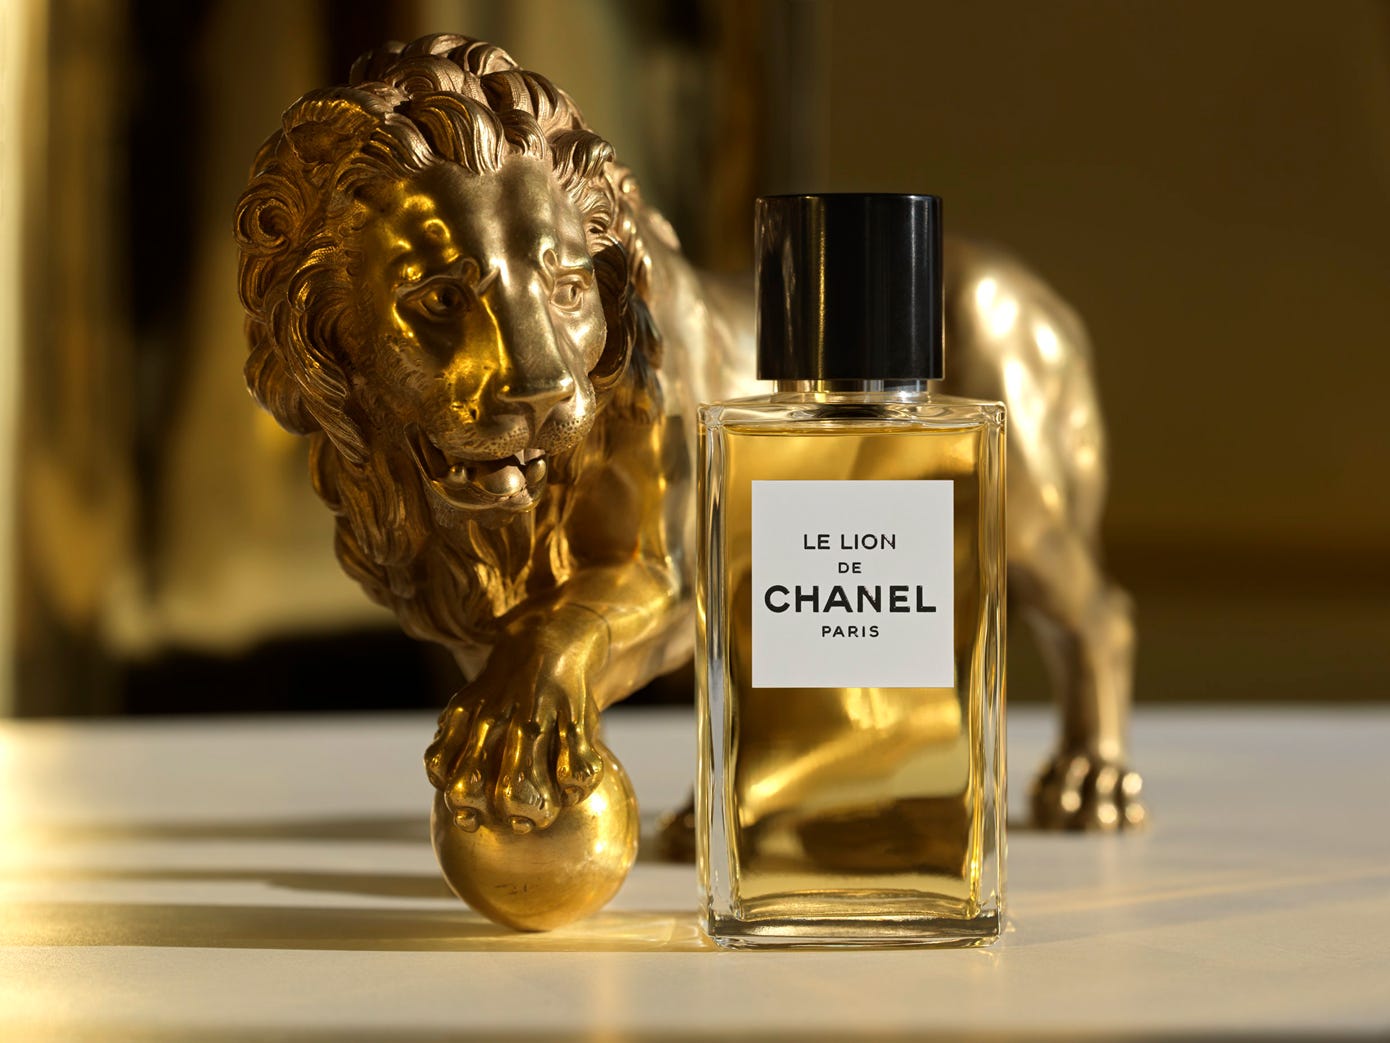 LE LION DE CHANEL — SHALIMAR'S DARK MIRROR, by Miccaeli 🖋